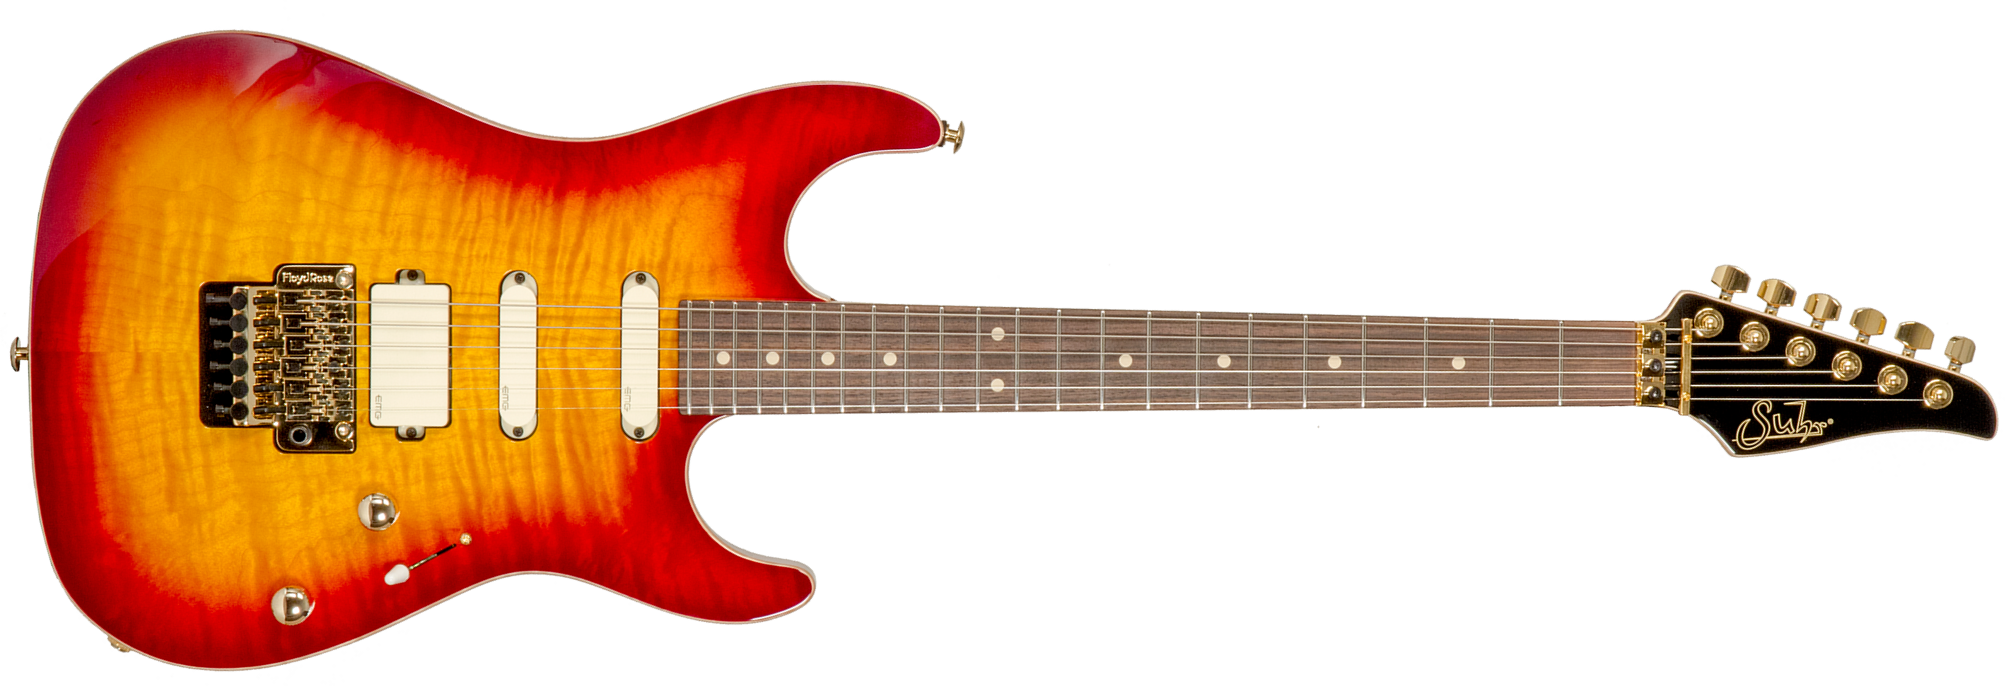 Suhr Standard Legacy 01-ltd-0030 Hss Emg Fr Rw #72940 - Aged Cherry Burst - Str shape electric guitar - Main picture